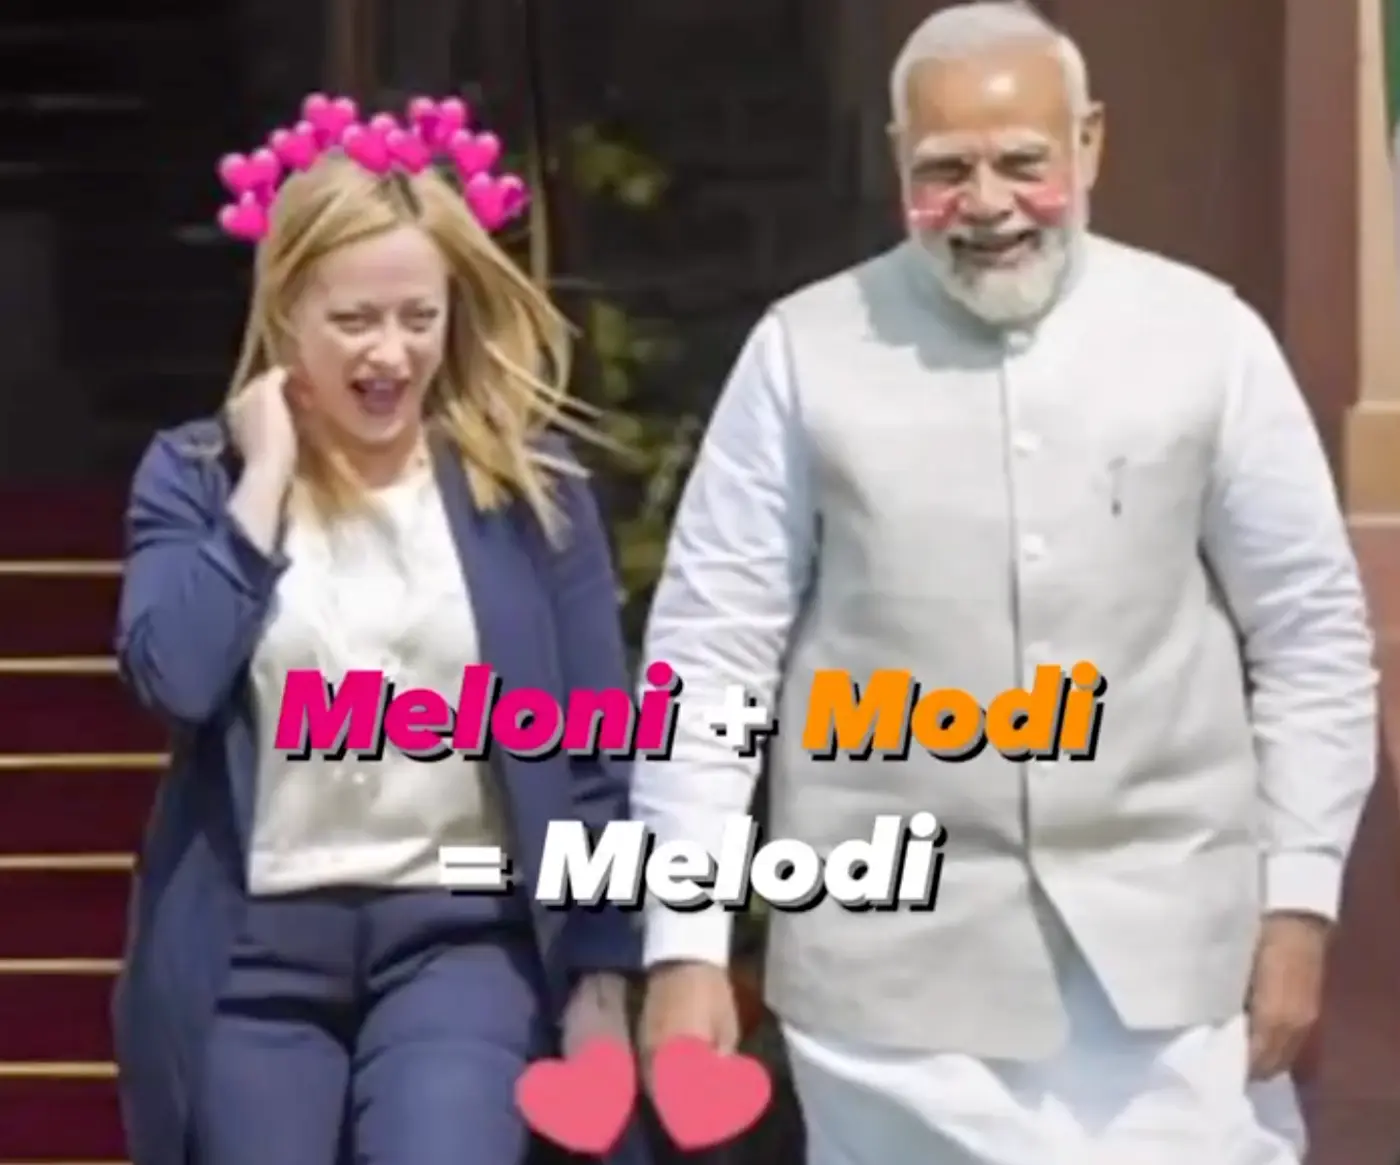 Modi and Meloni = Melody